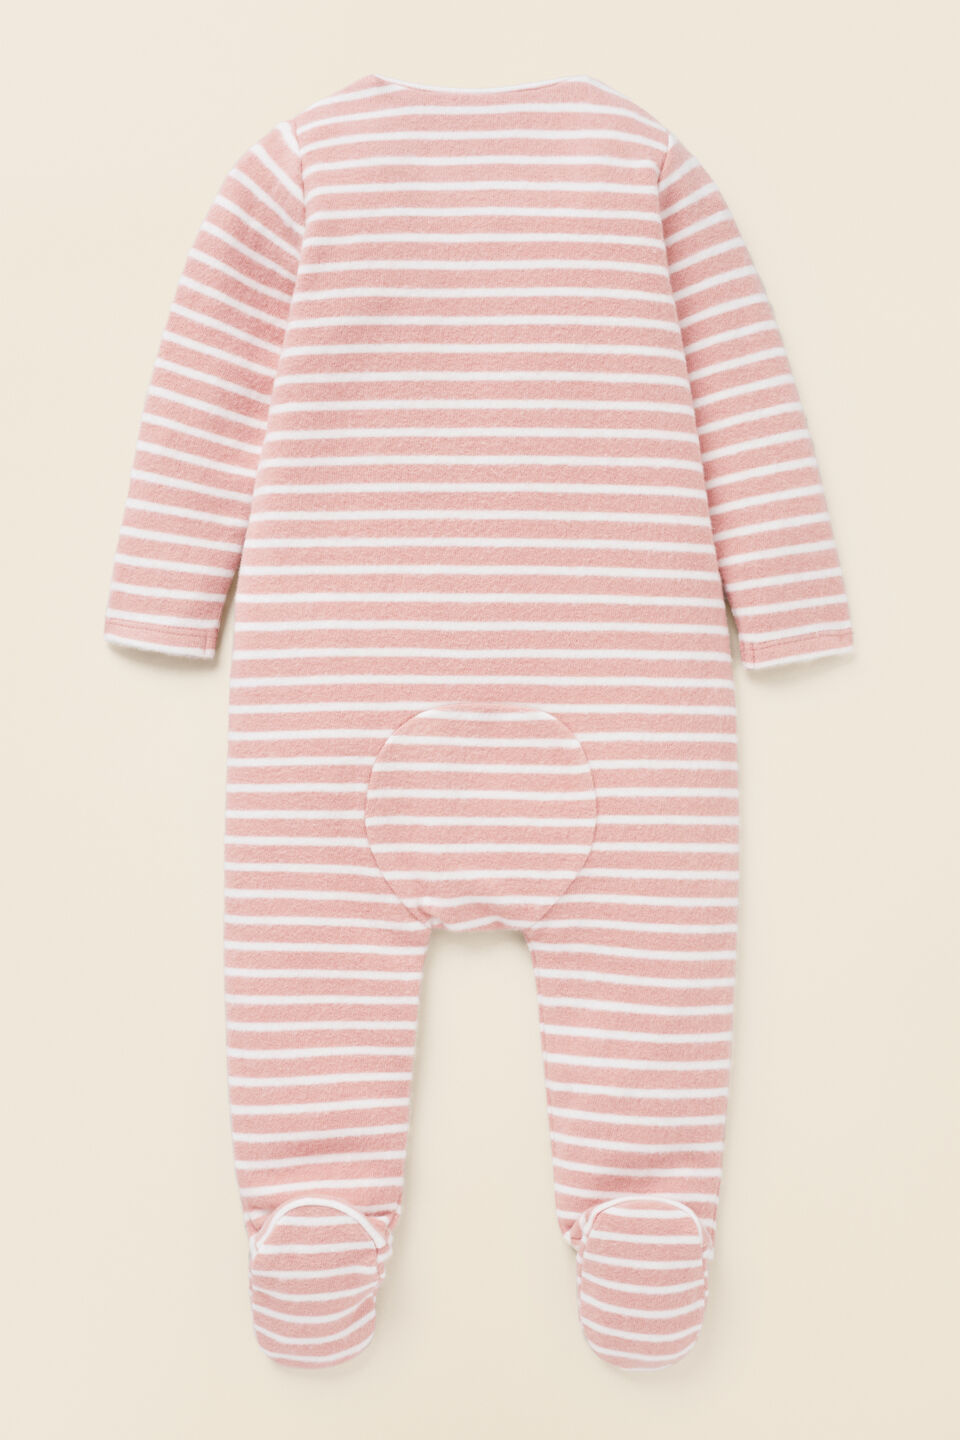 Brushed Stripe Zipsuit  Chalk Pink  hi-res